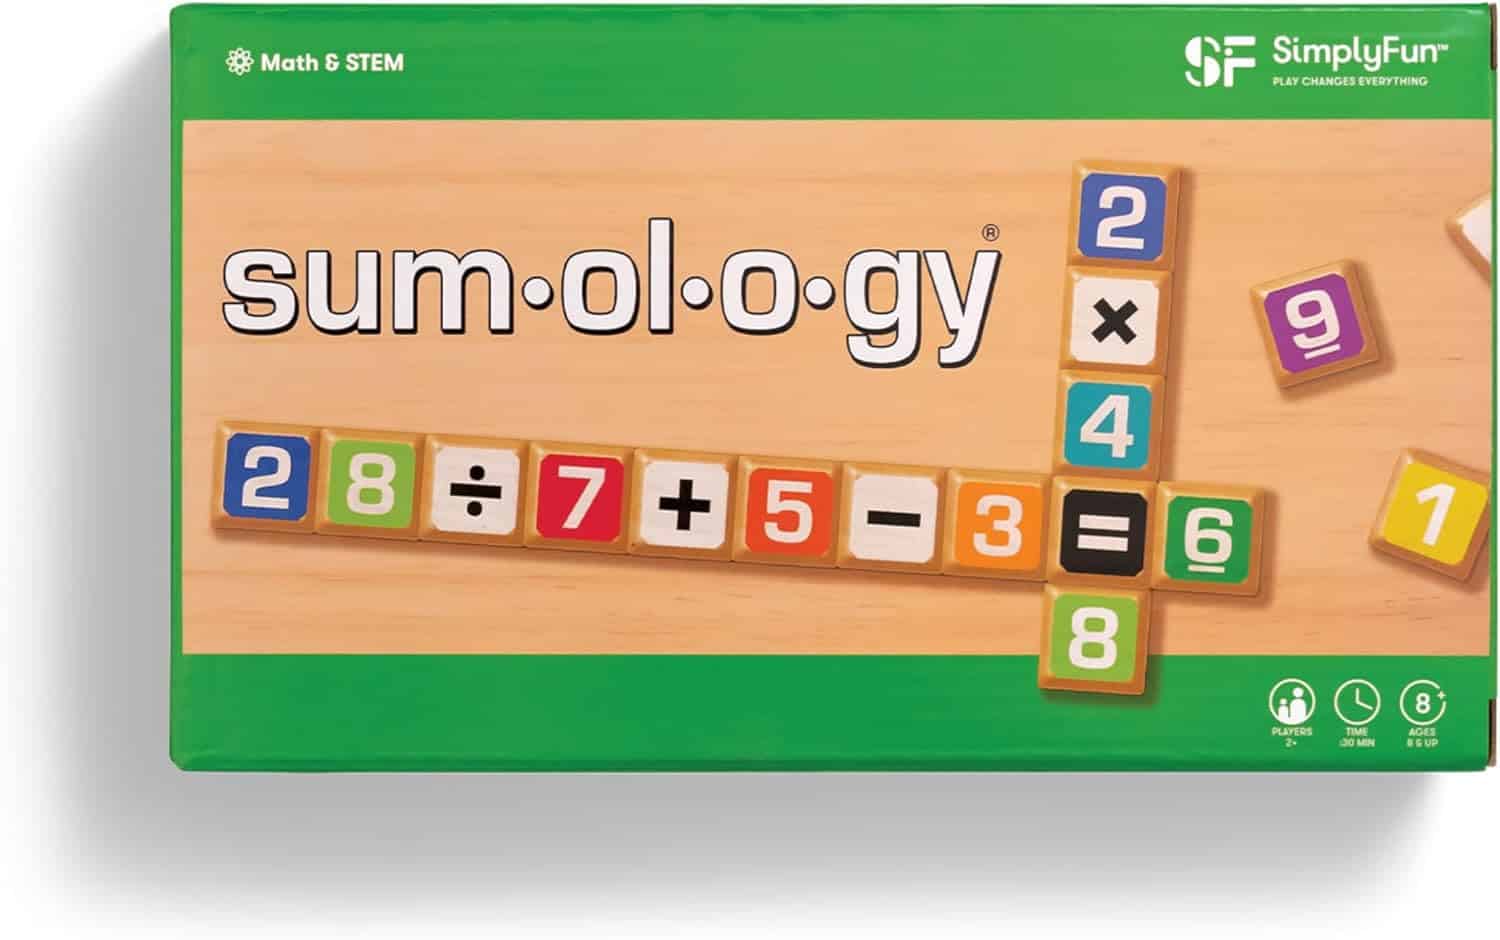 simplyfun sumology math game